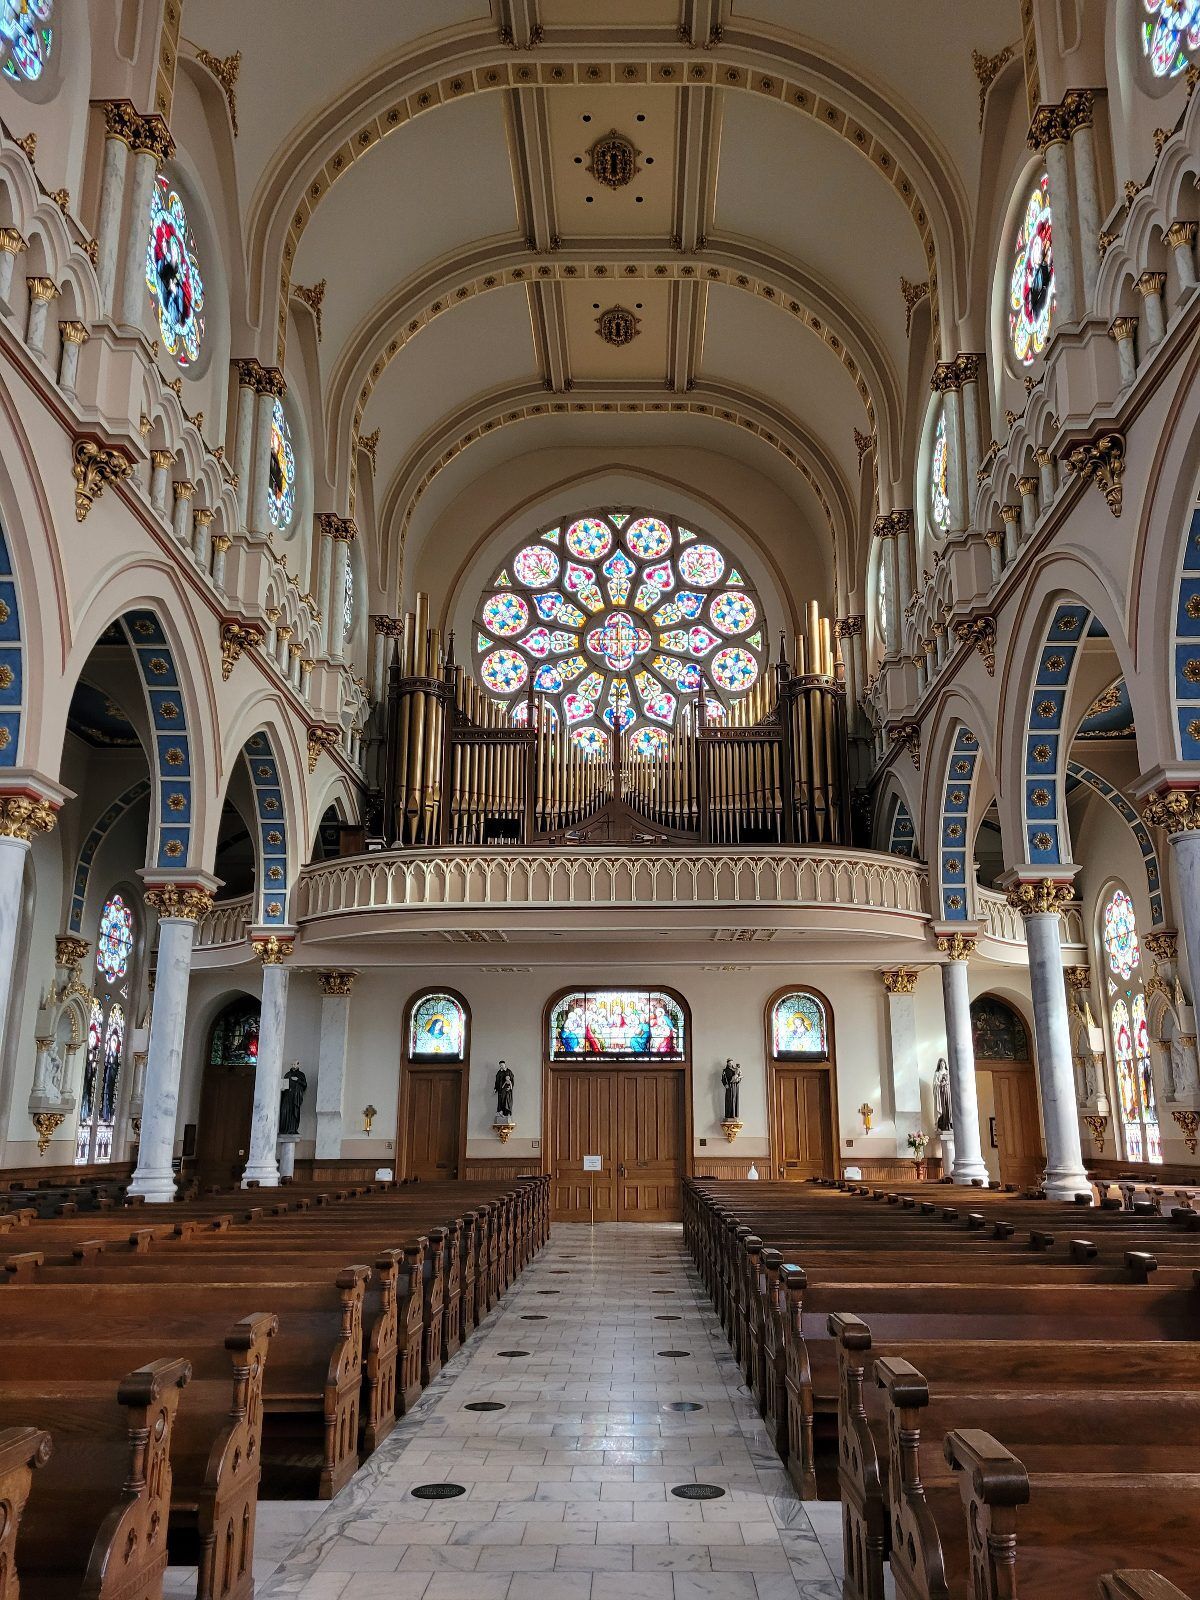 "St. Joseph Church, a historic landmark in Macon, Georgia, showcasing stunning architectural beauty."